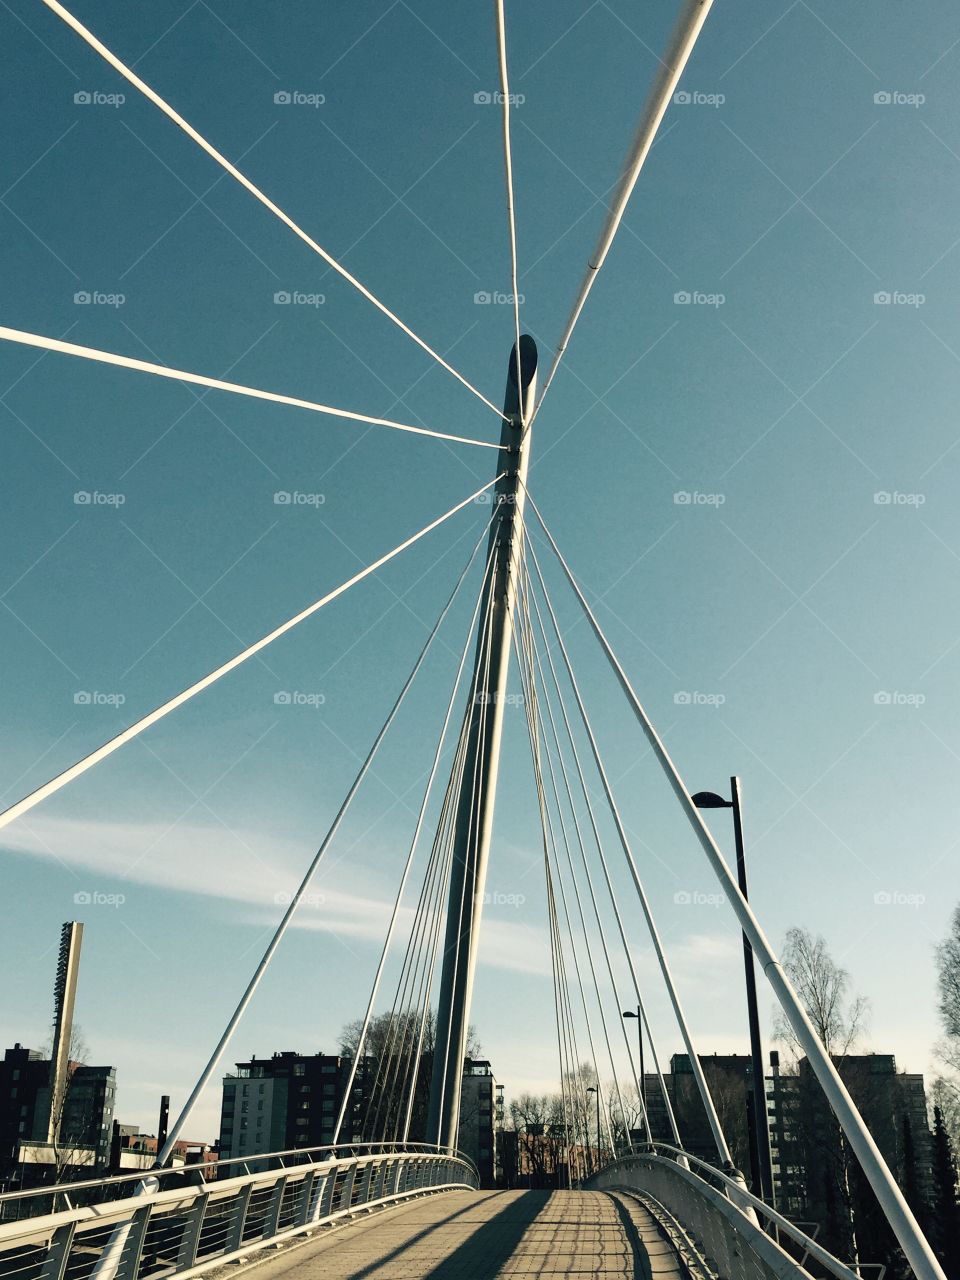 String bridge. Modern bridgeIn the city of Tampere